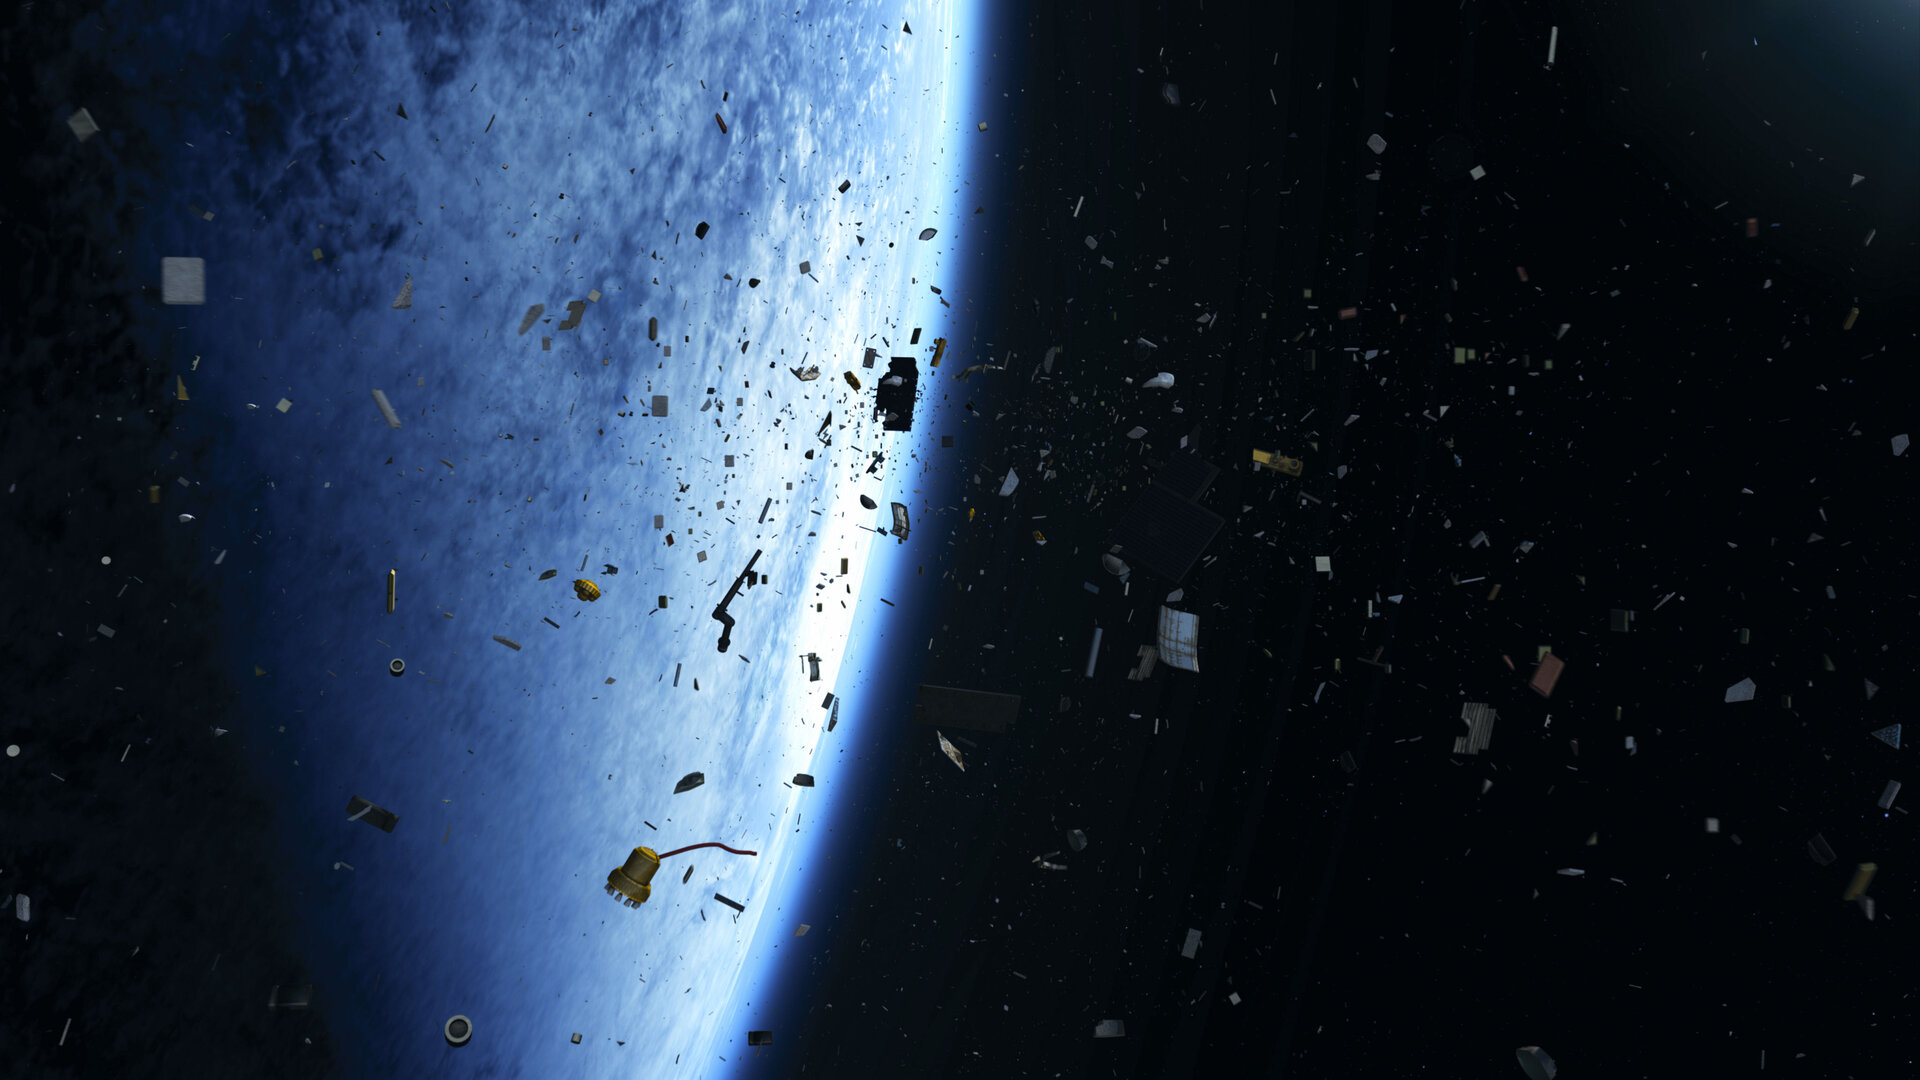 Debris in low orbit